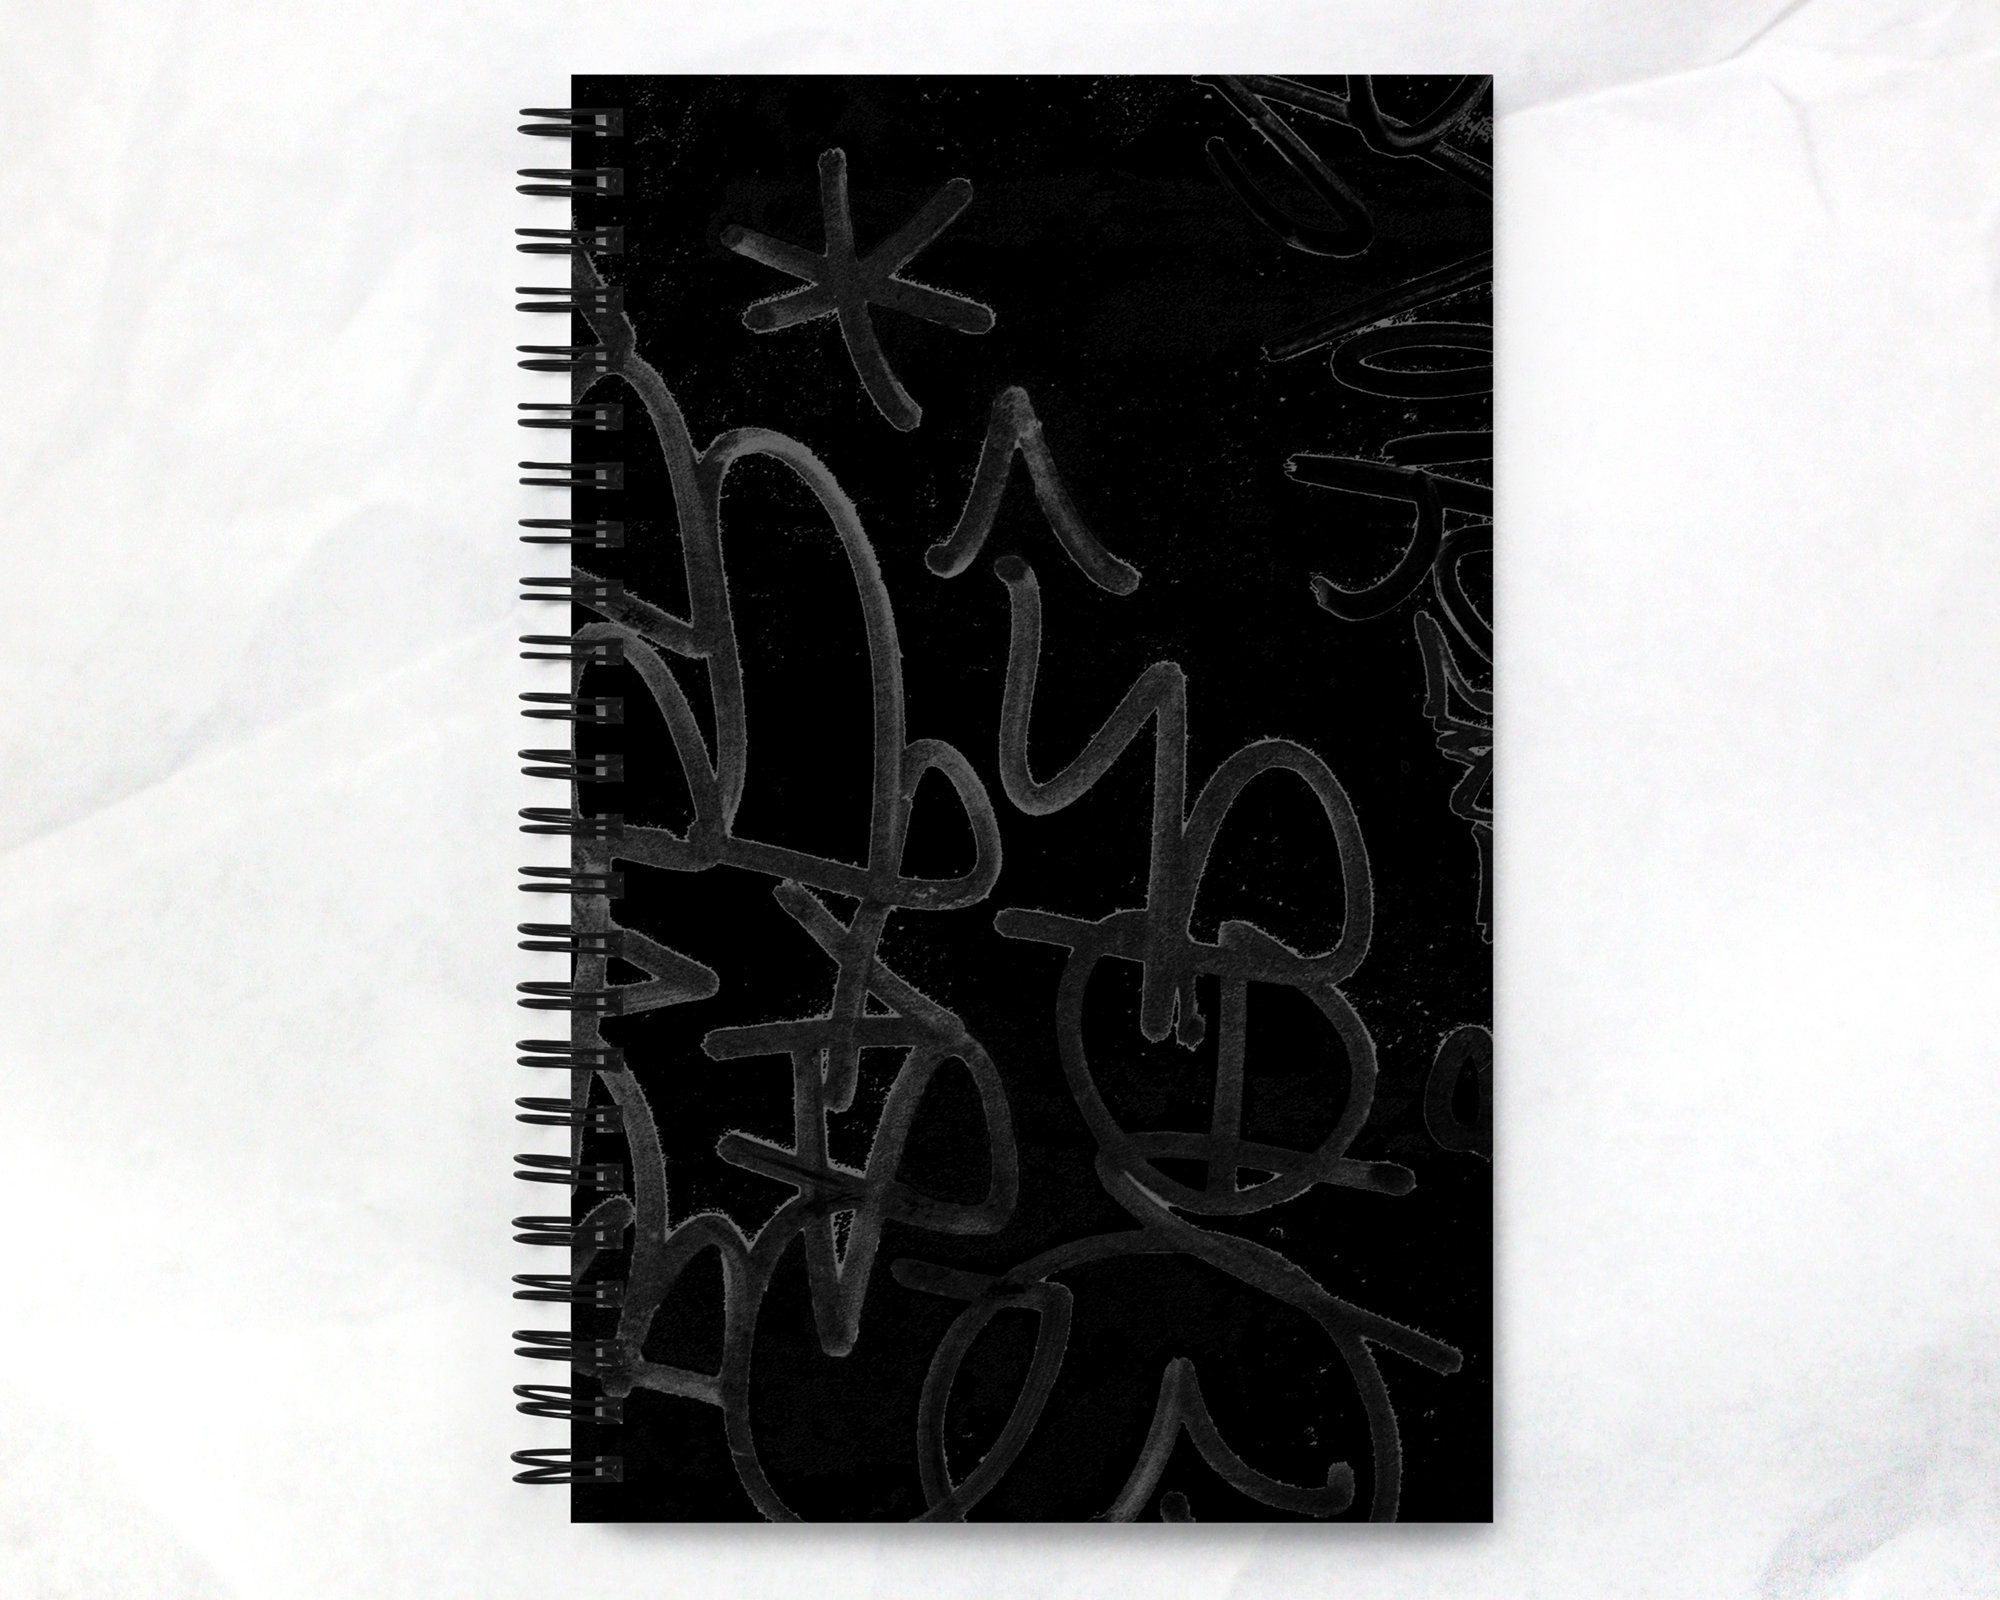 Art Supplies Hand Drawn Graffiti Sketch Book Art Sketch Book A4